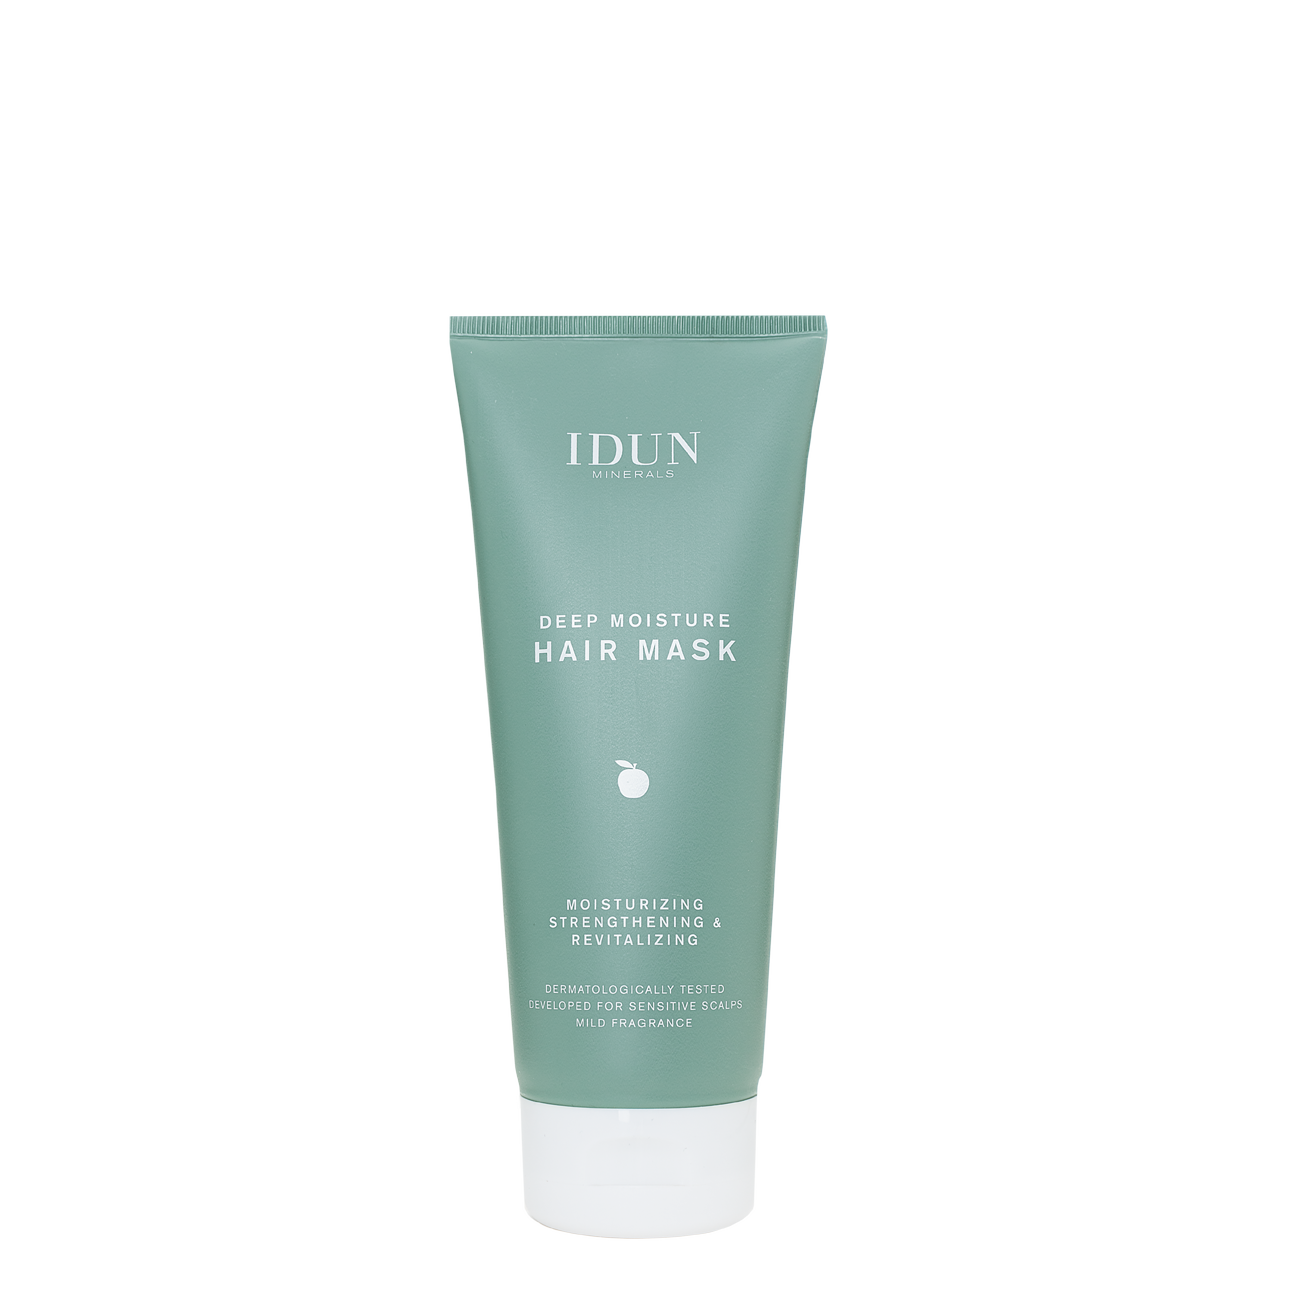 Se Idun Hair Mask Deep Moisture - 200 ml hos Duft og Natur